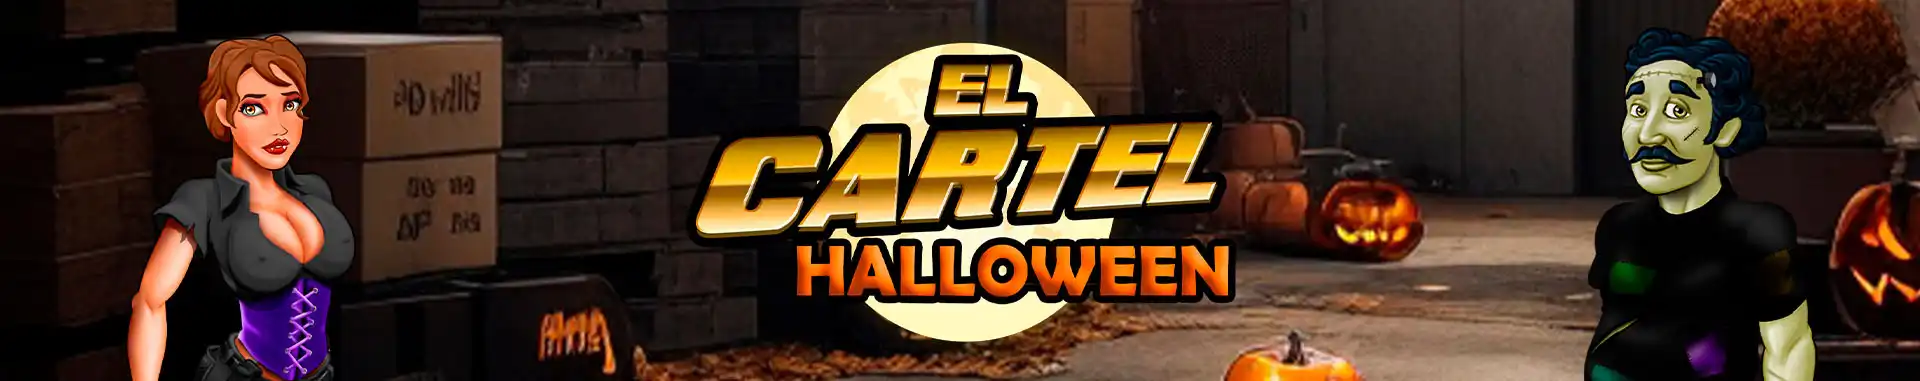 Tragaperras online El Cartel Halloween